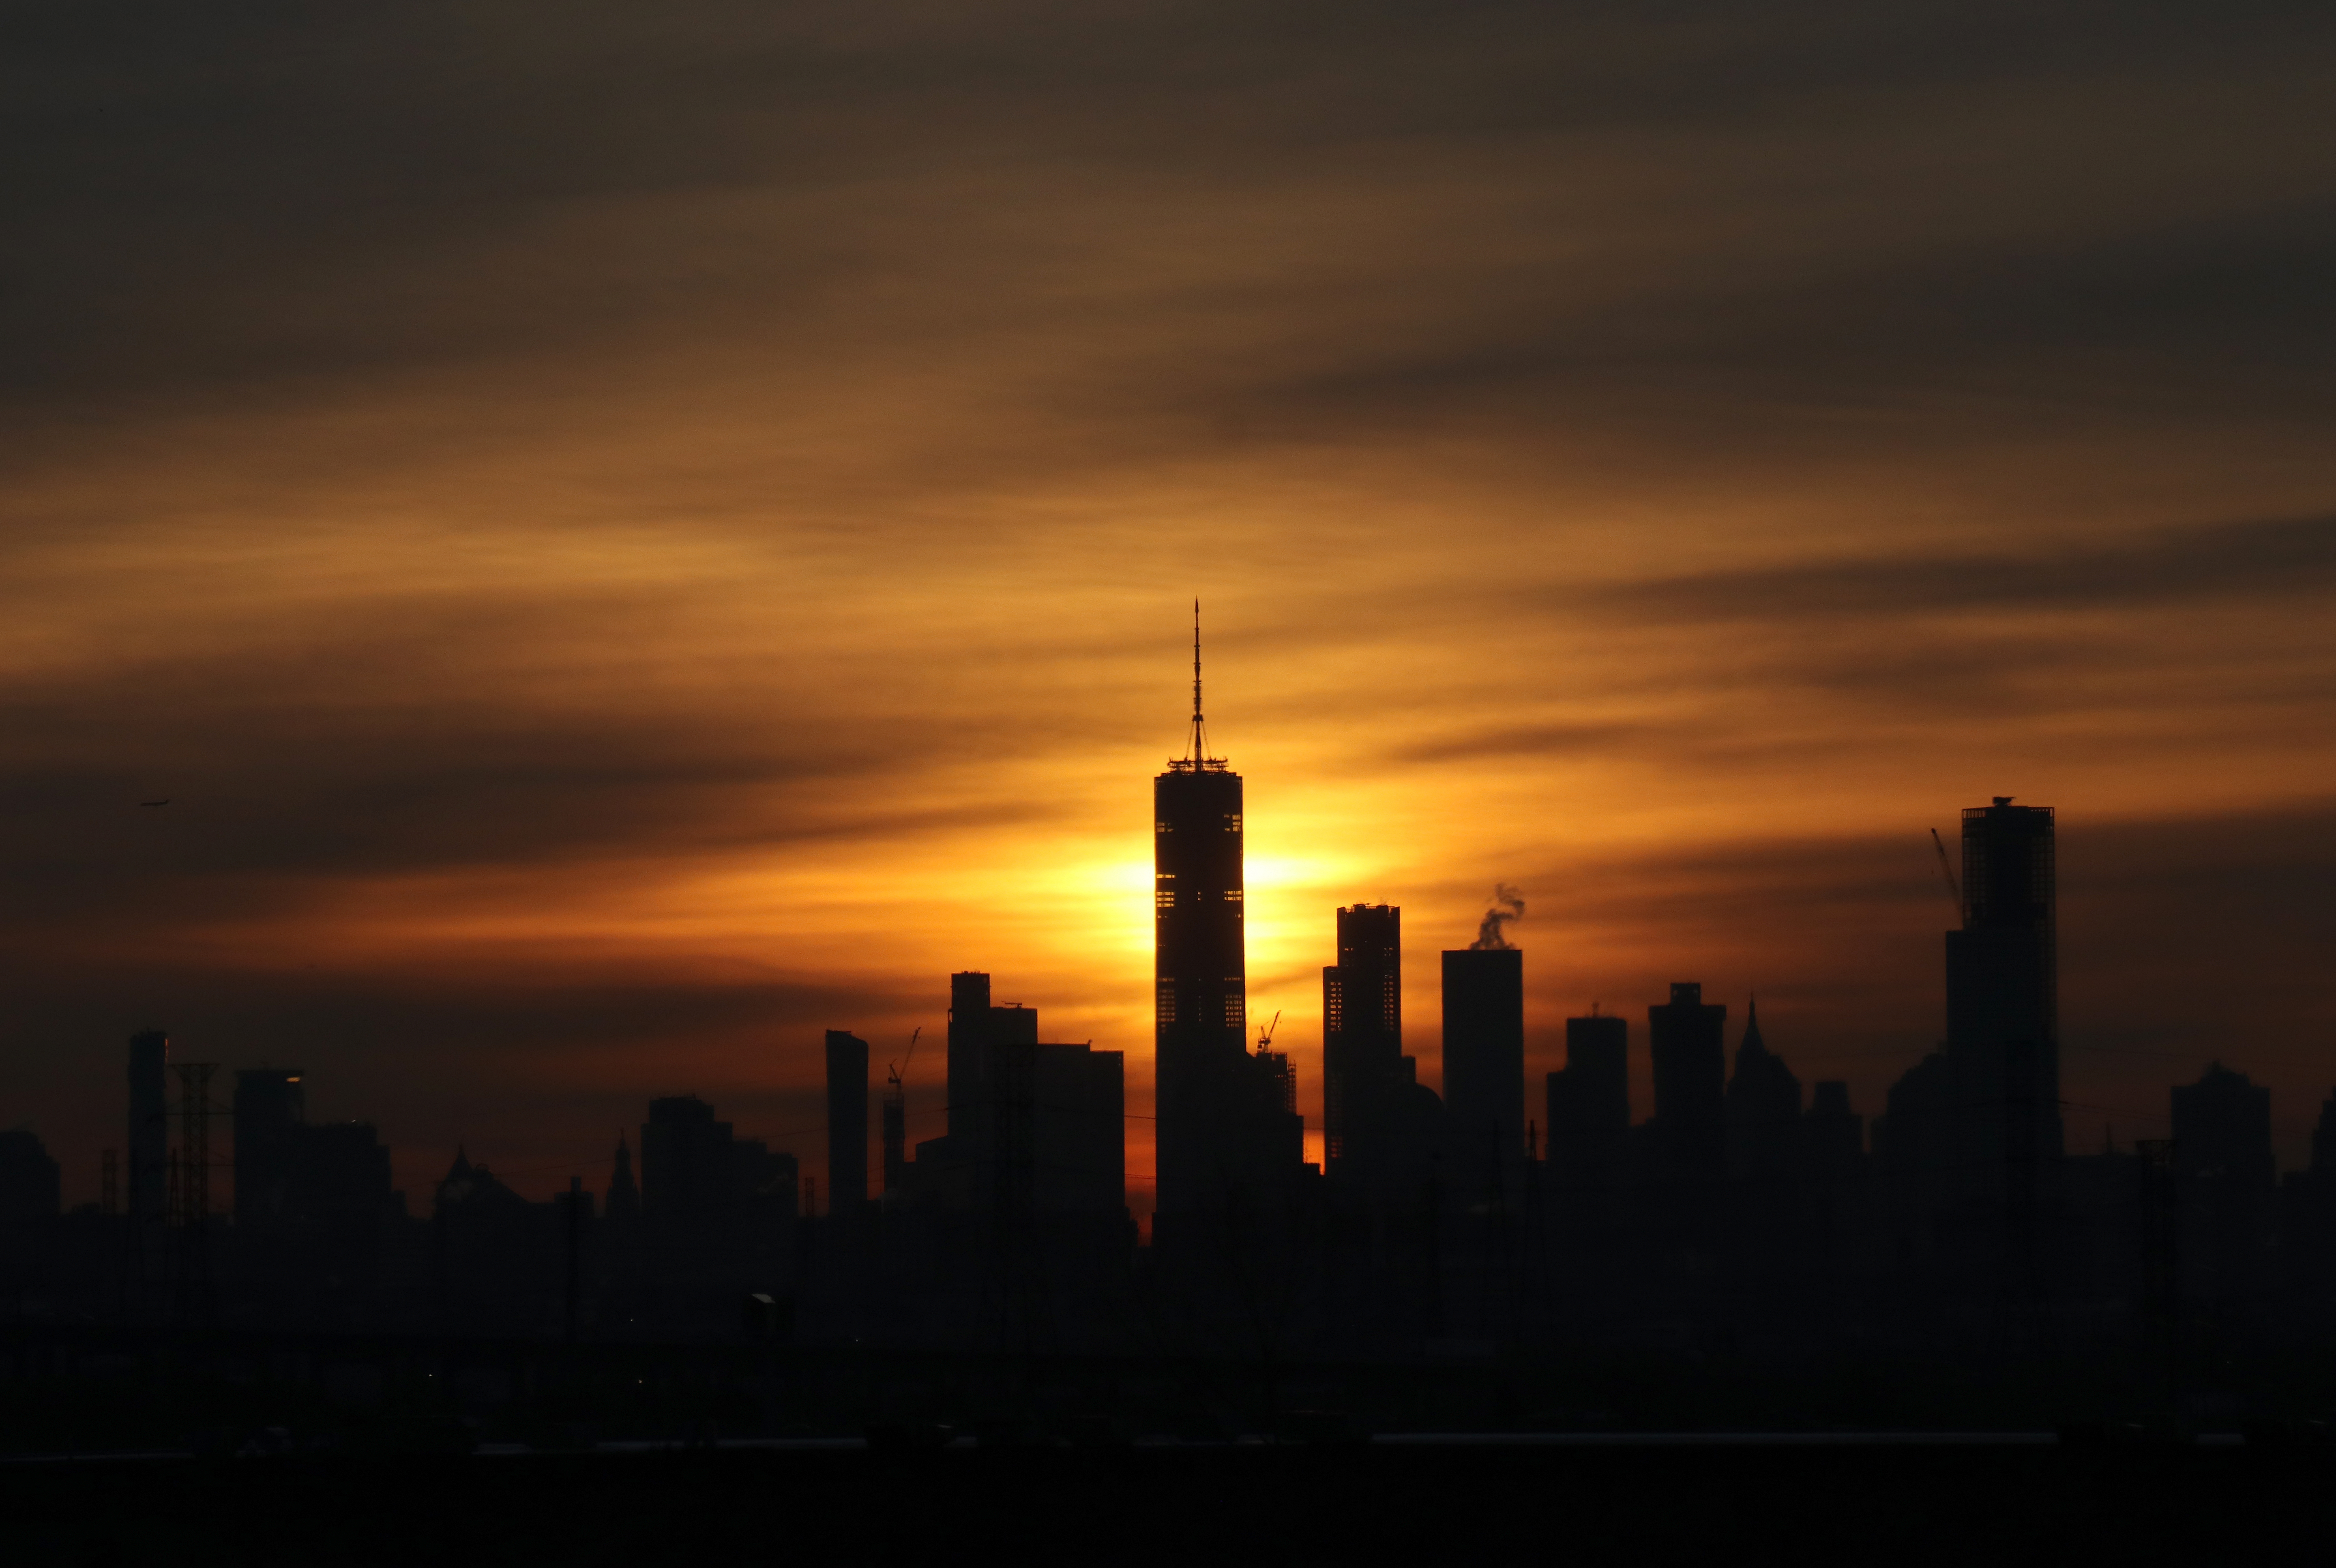 Winter Solstice Sunrise in New York City